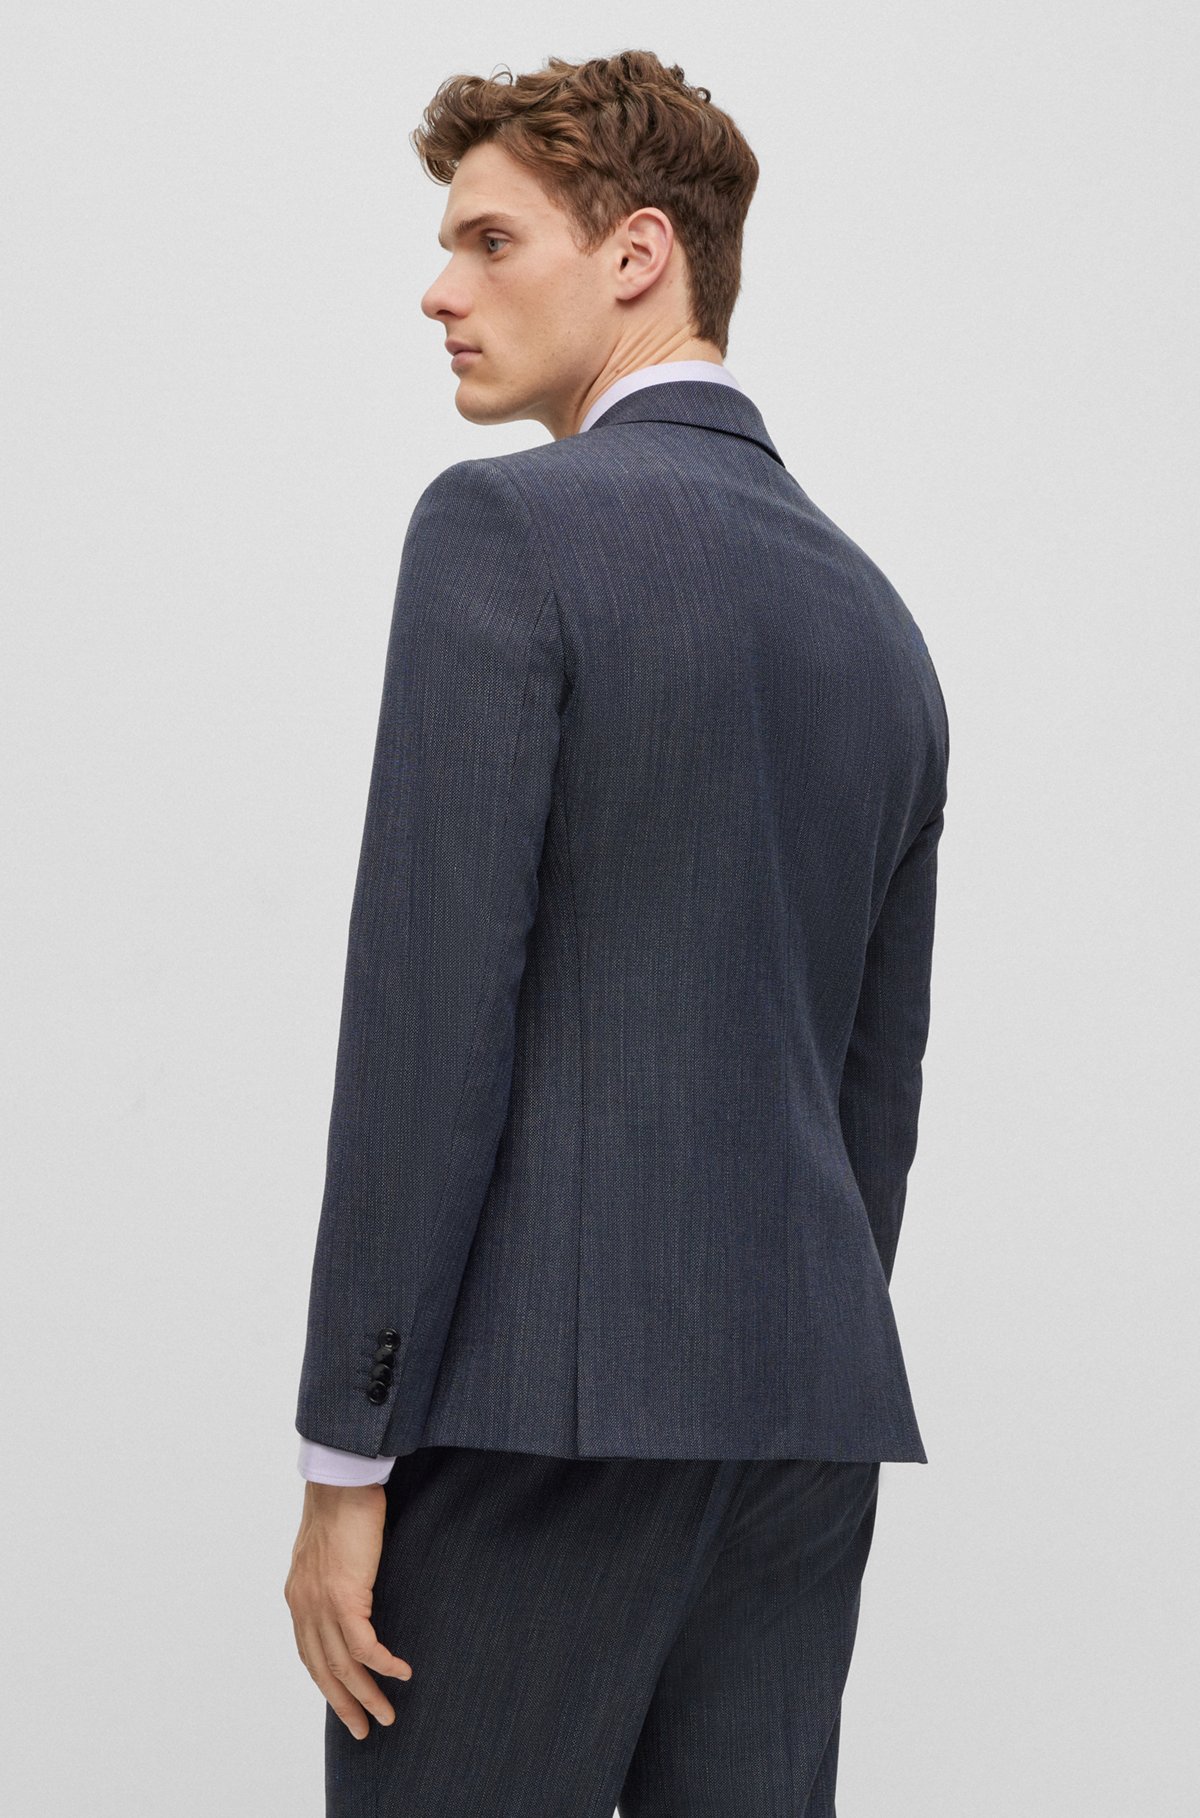 Slim-fit suit in a micro-patterned wool blend, Dark Blue